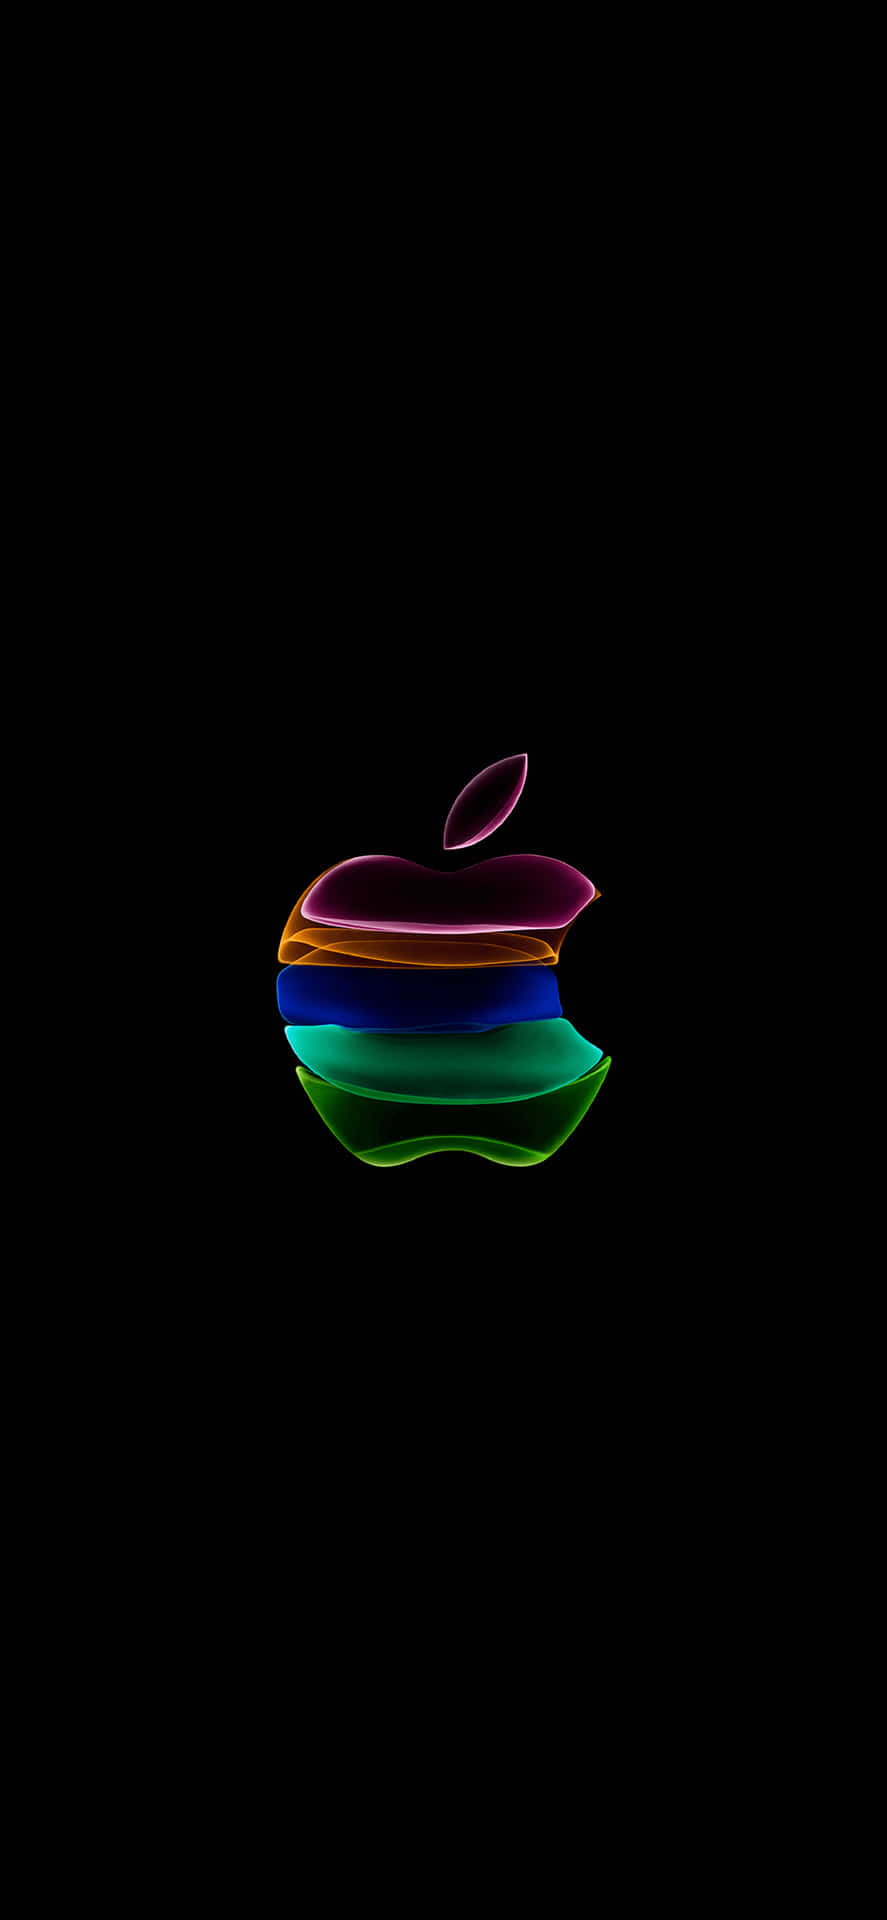 Iphone X Apple Logo Holograph Wallpaper